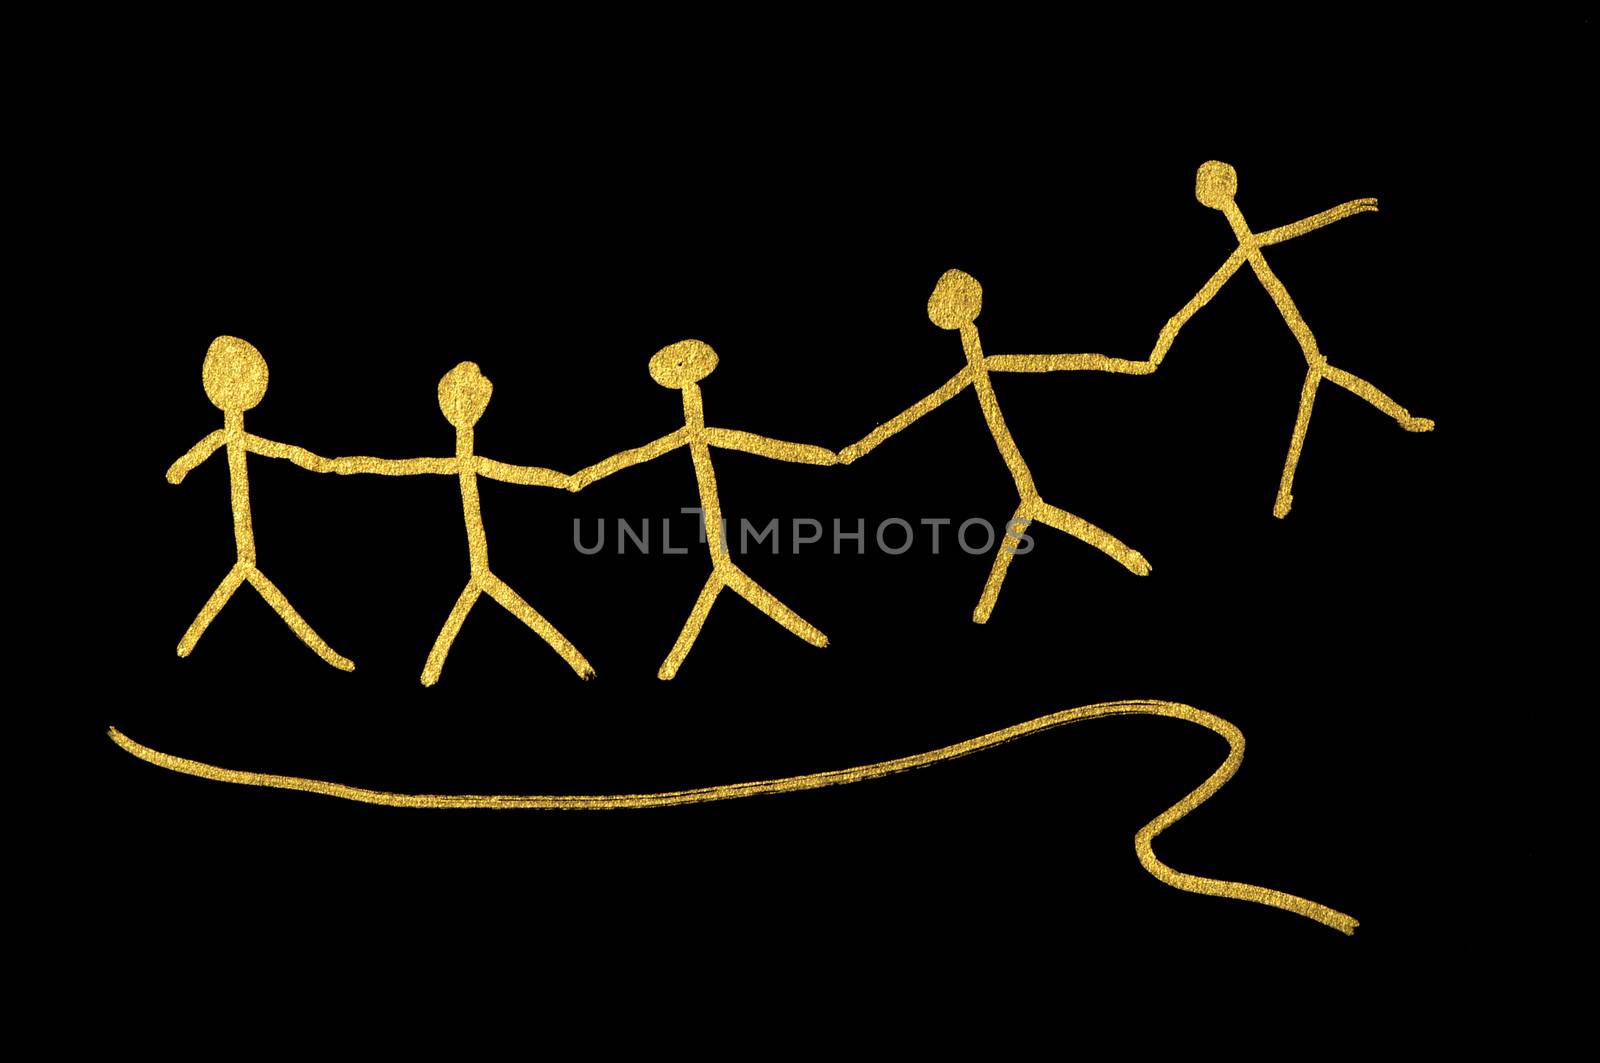 People holding hands illustration over black. Teamwork and social network concept